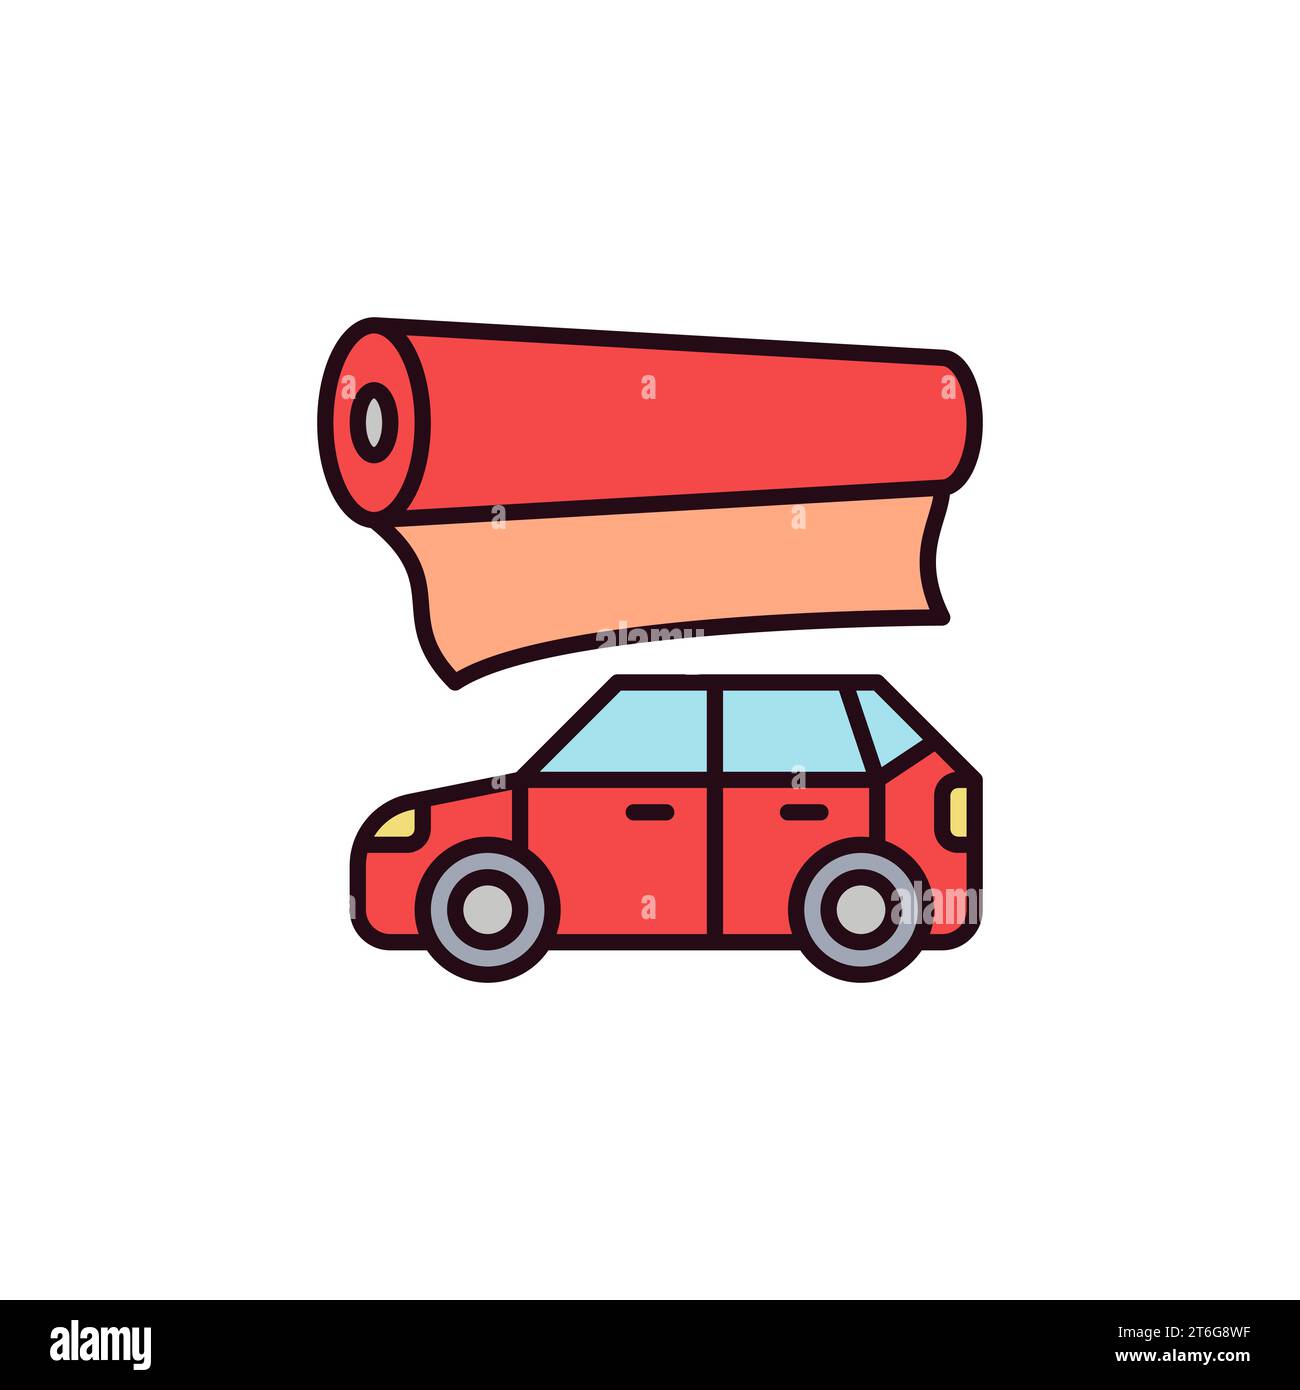 Car Vinyl Wrap vector Vehicle concept colored icon or design element Stock Vector